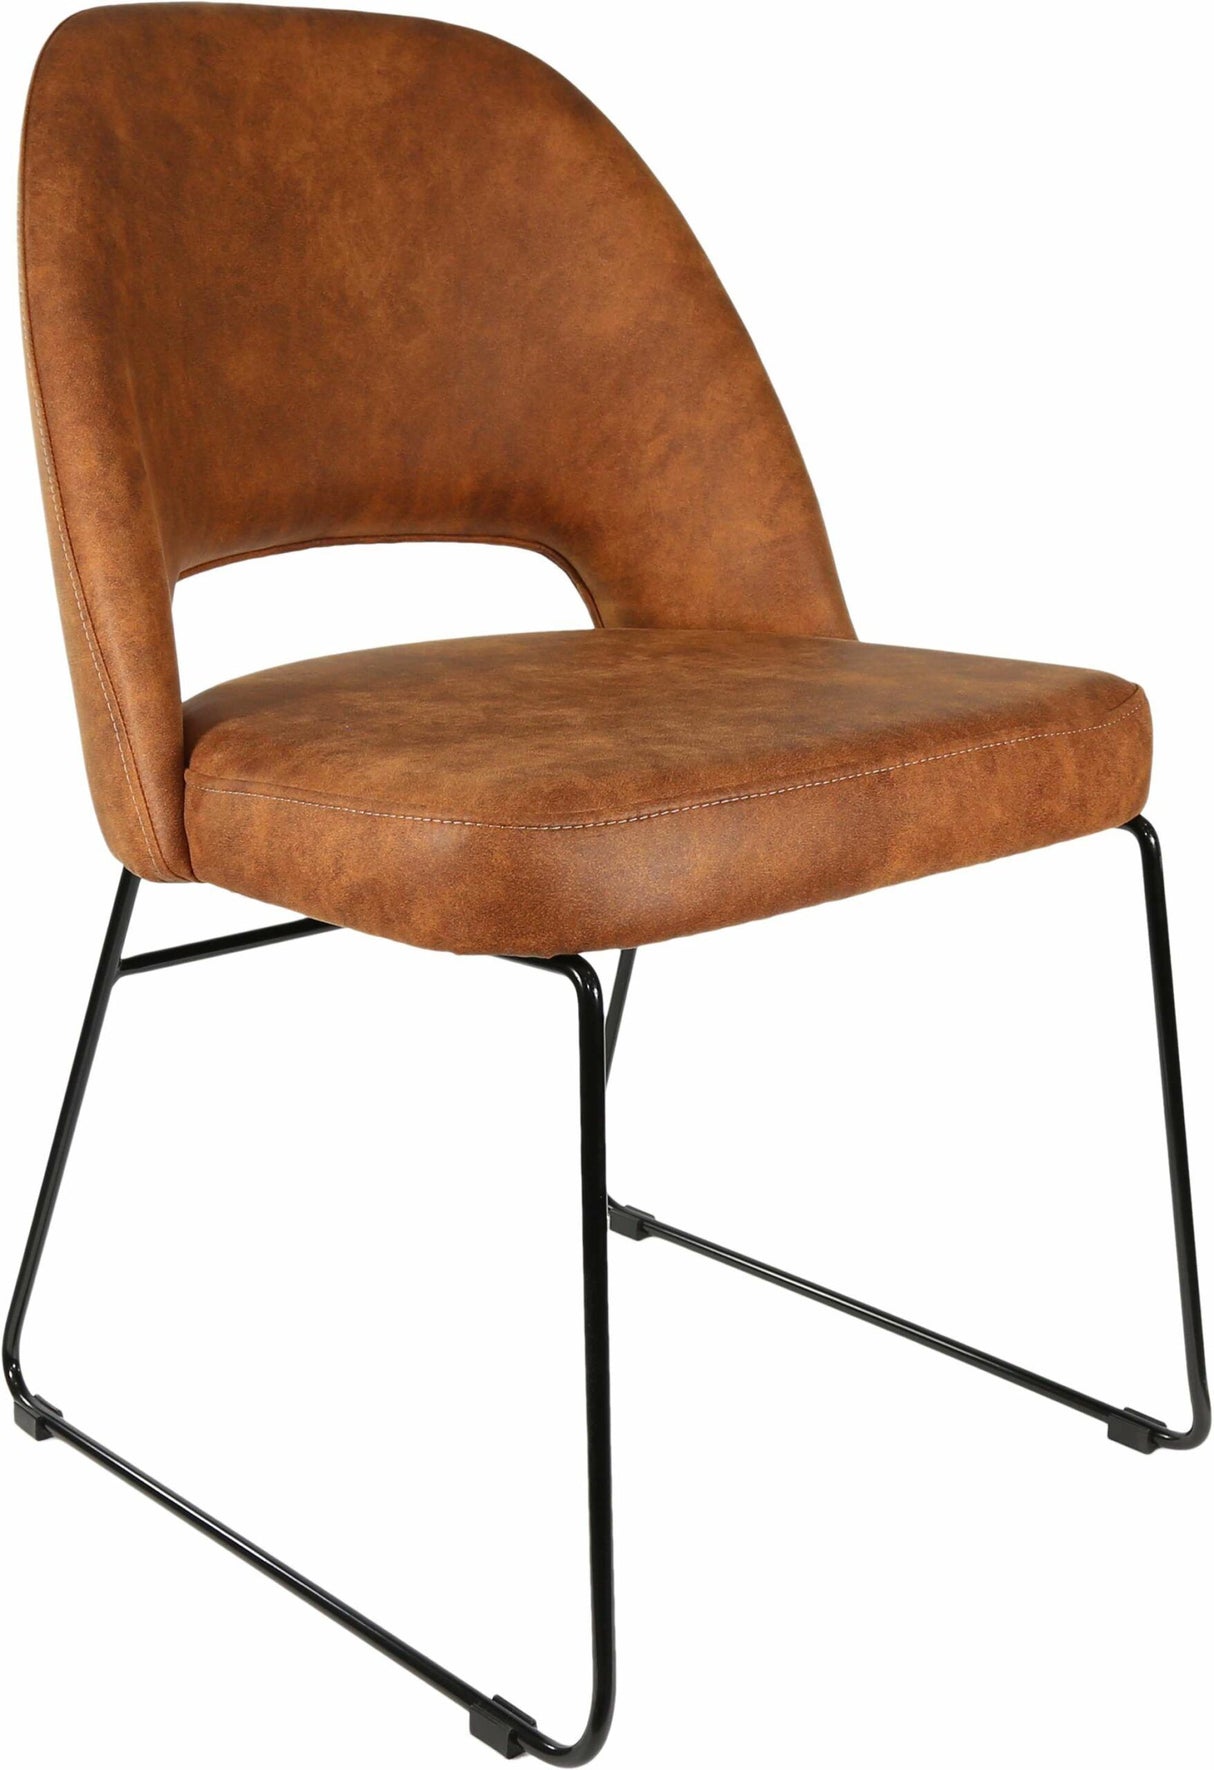 Semifreddo Chair with Black Sled Base (Tan)